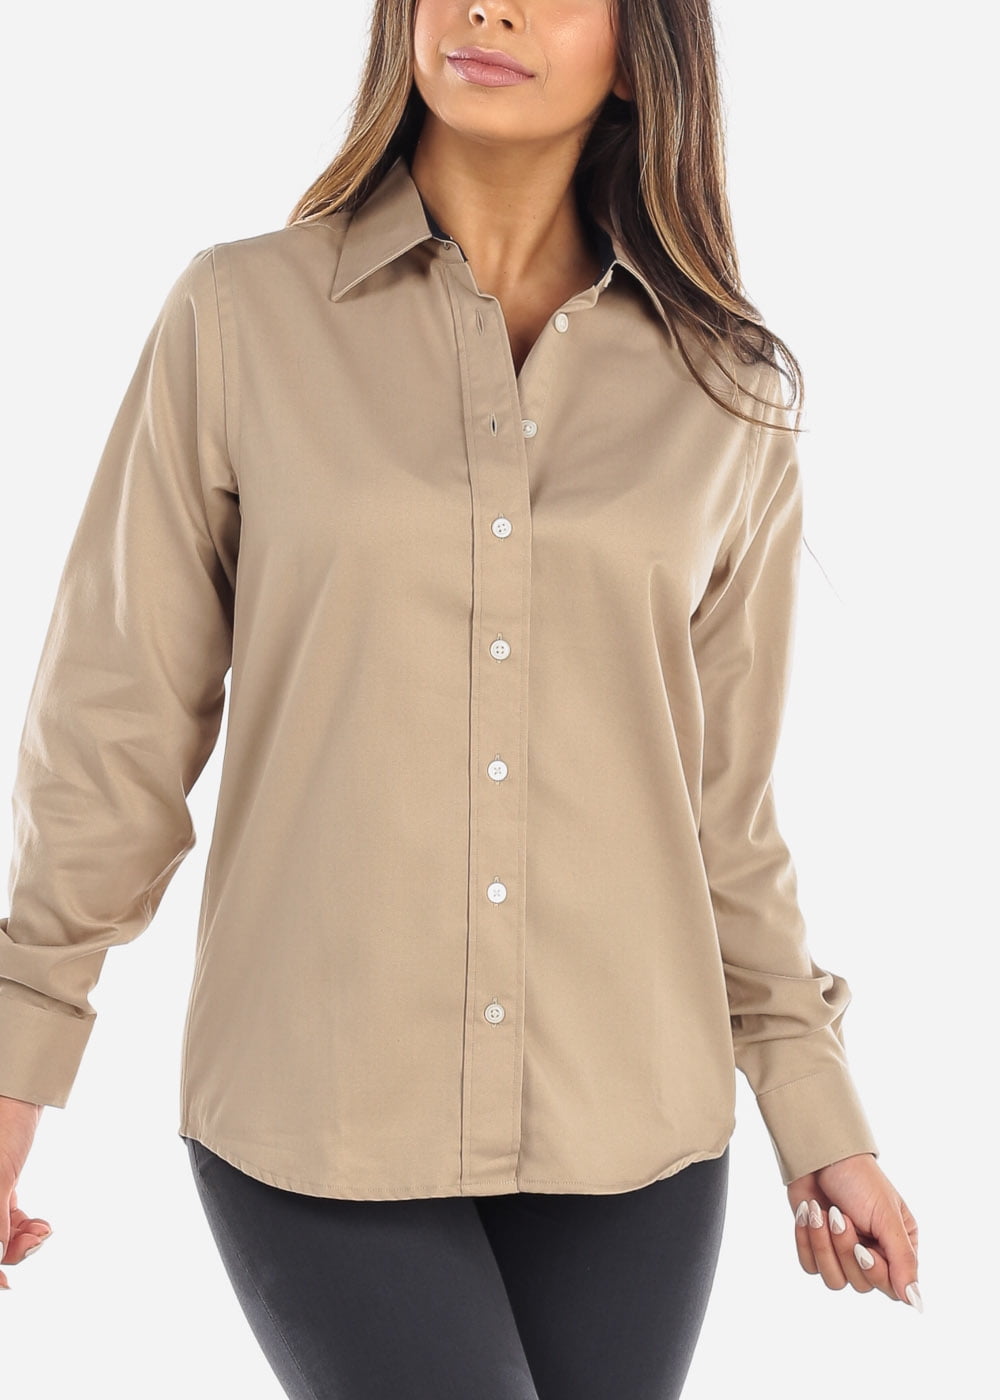 Moda Xpress - Womens Button Down Shirt Long Sleeve Career Wear Khaki ...